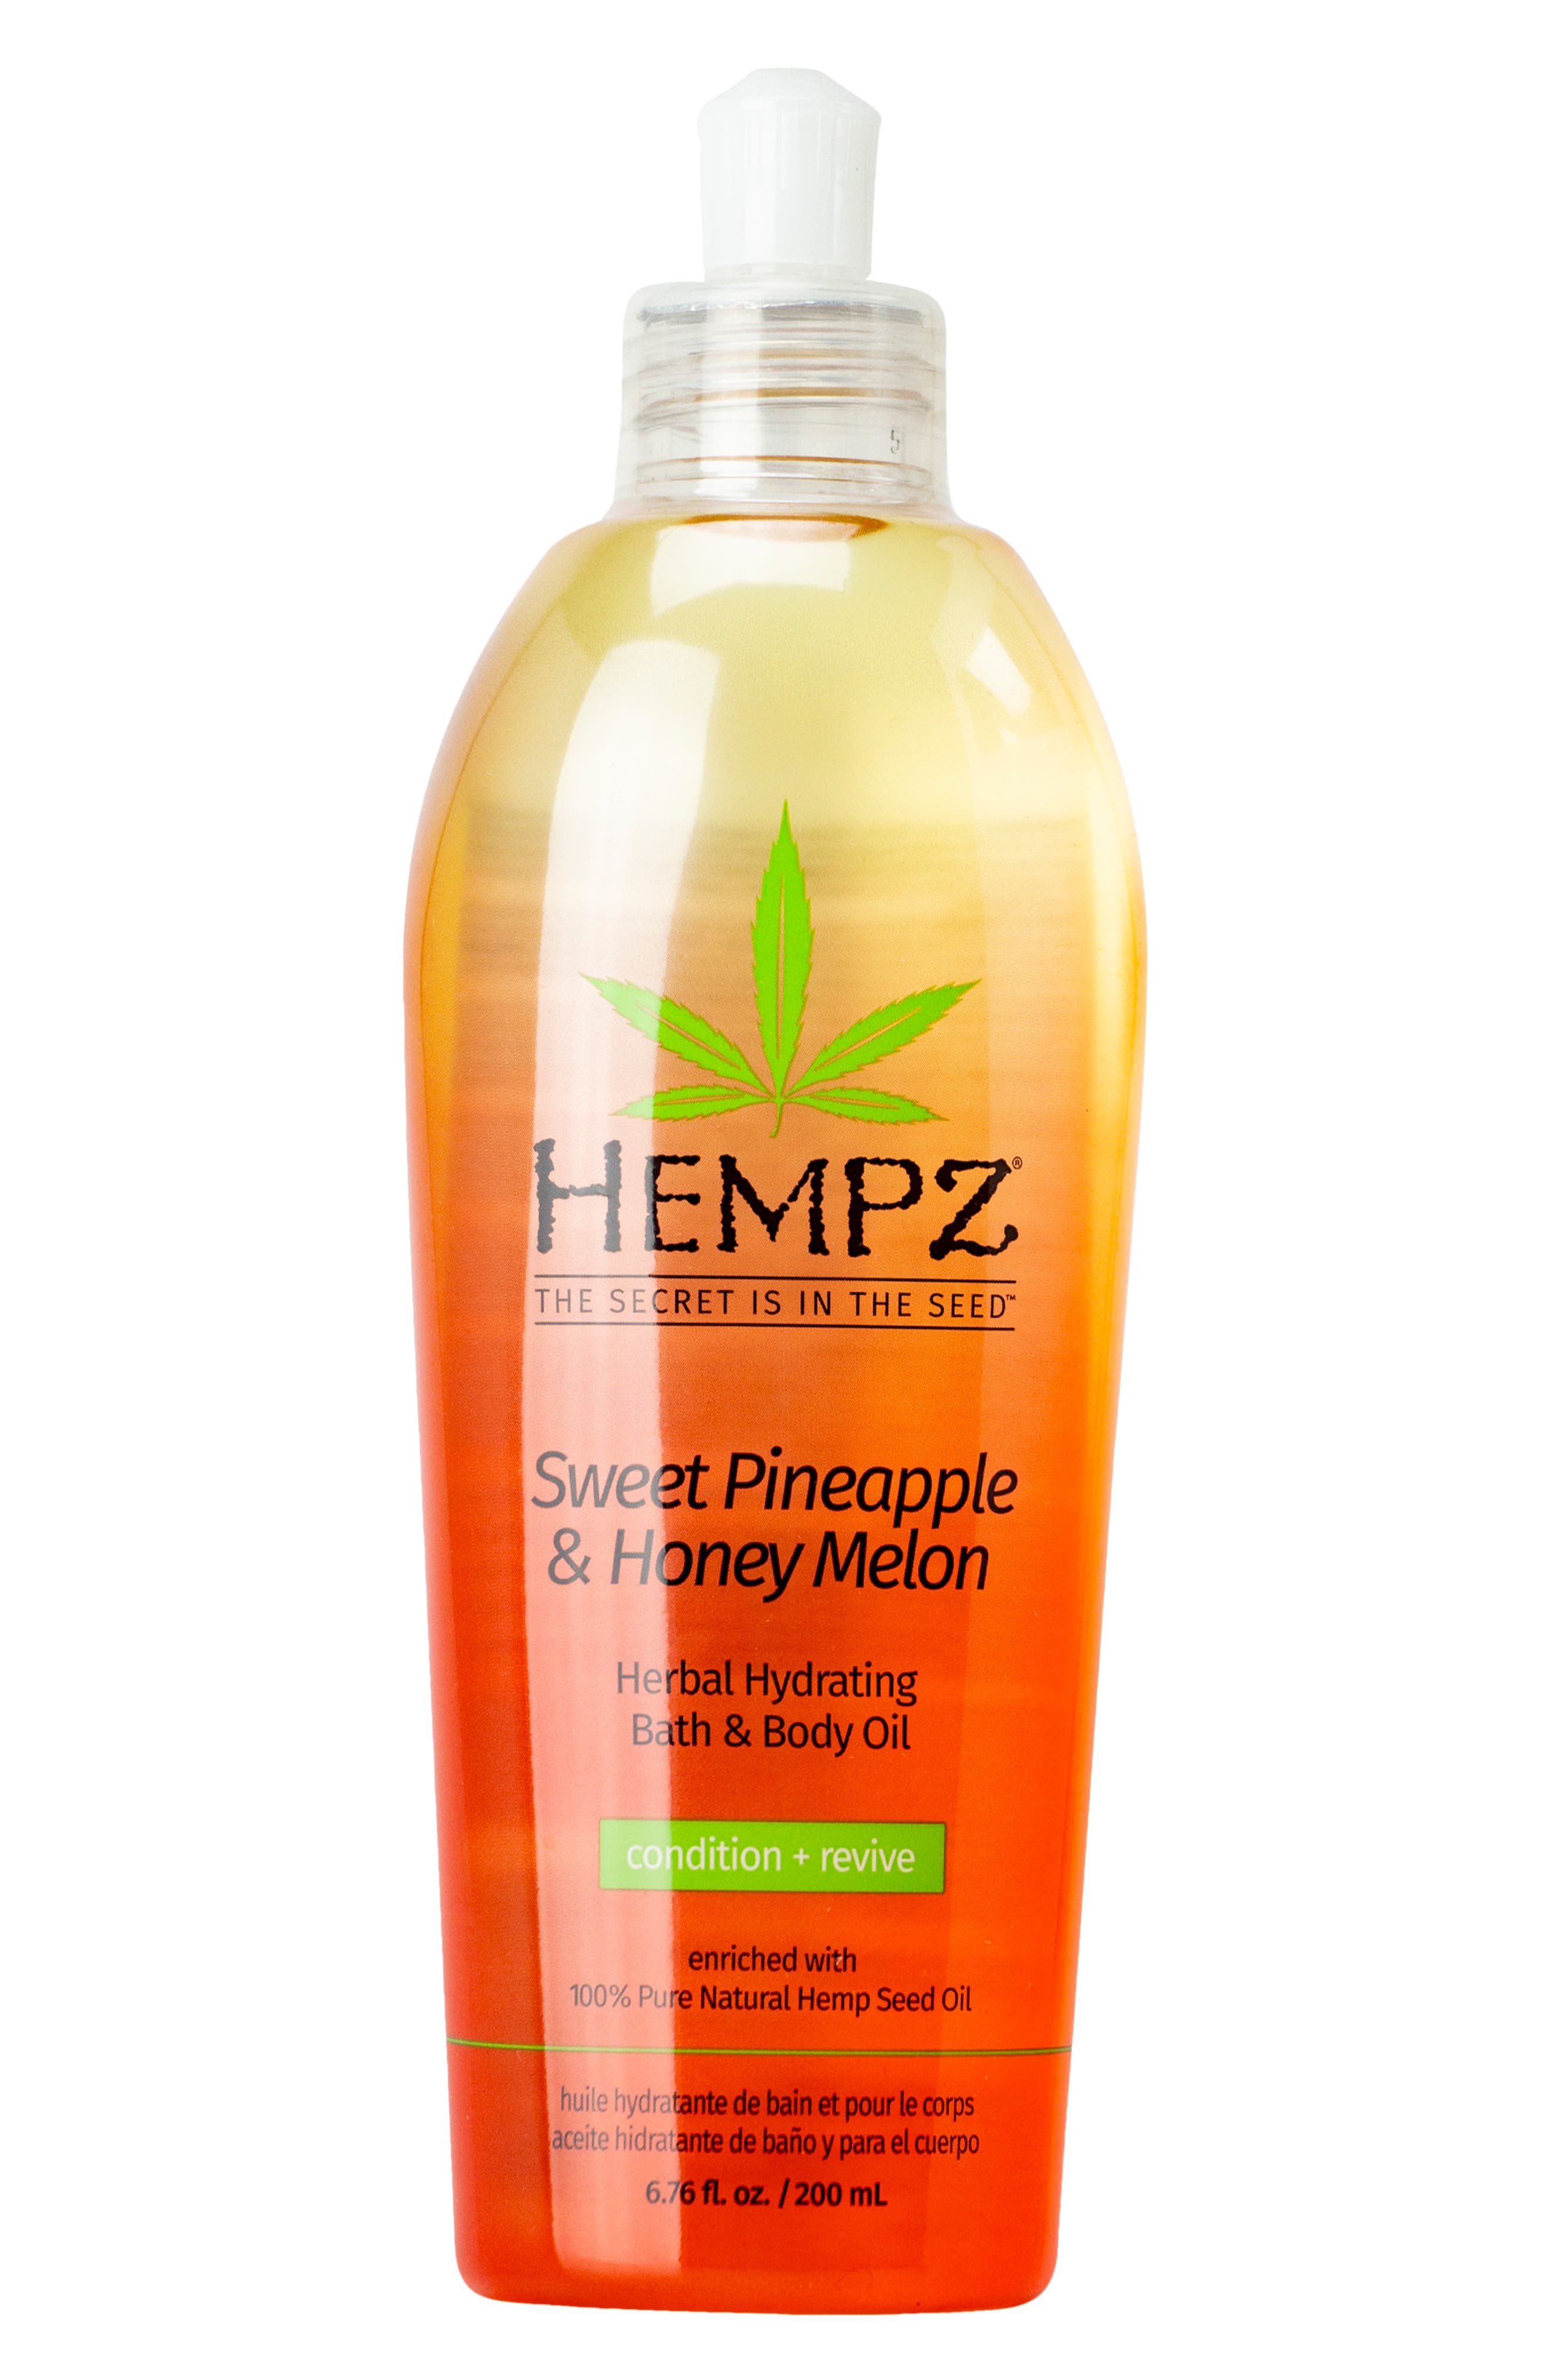 Sweet Pineapple & Honey Melon Hydrating Bath & Body Oil - 6.76 oz. Hempz